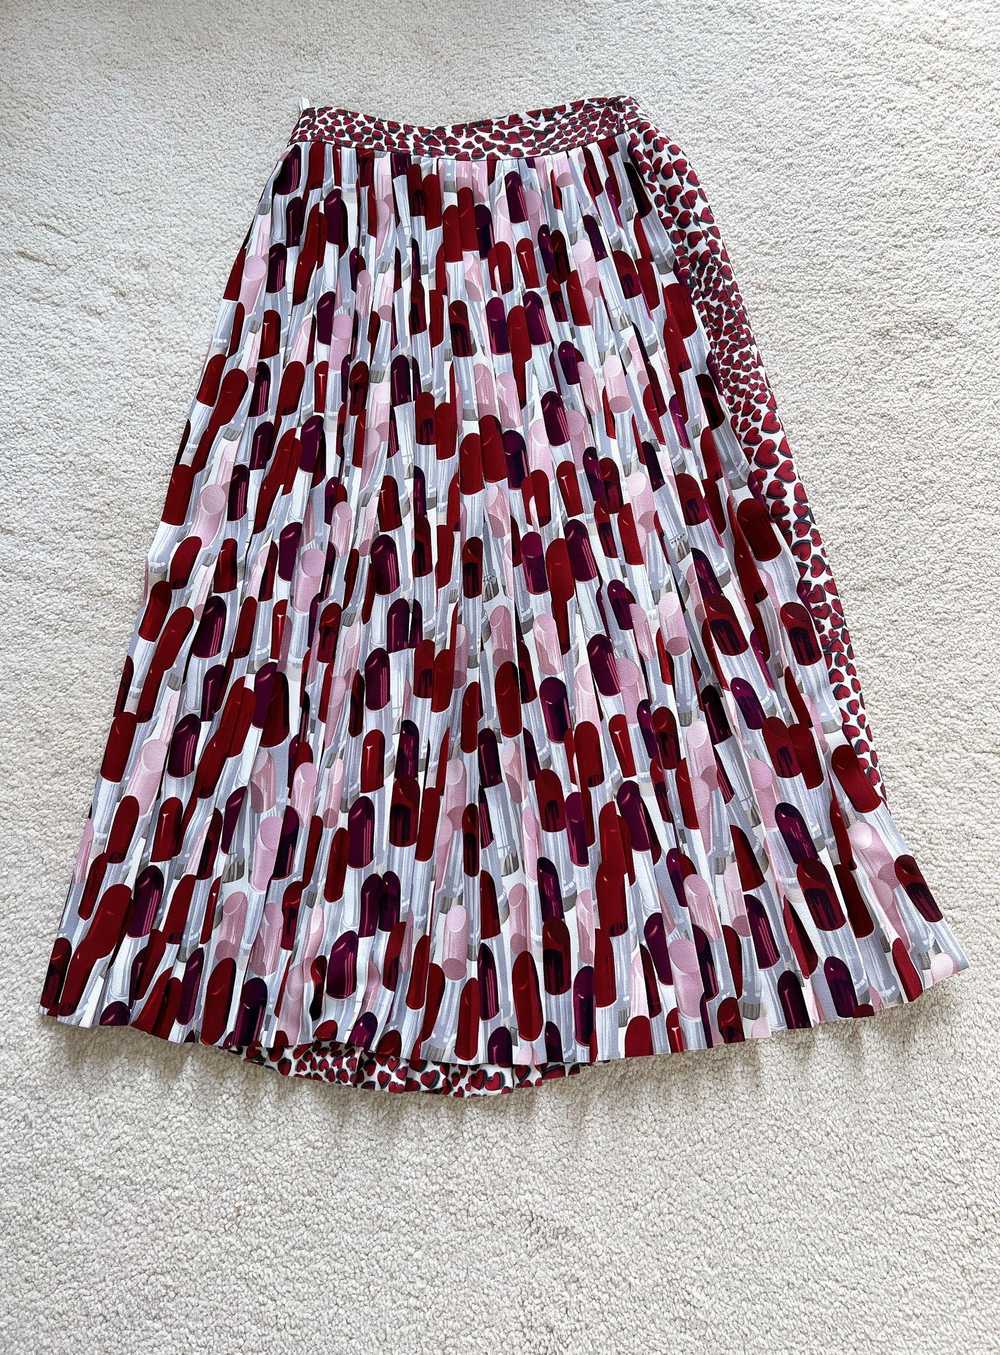 Product Details Prada Lipstick Print Pleated Skirt - image 2